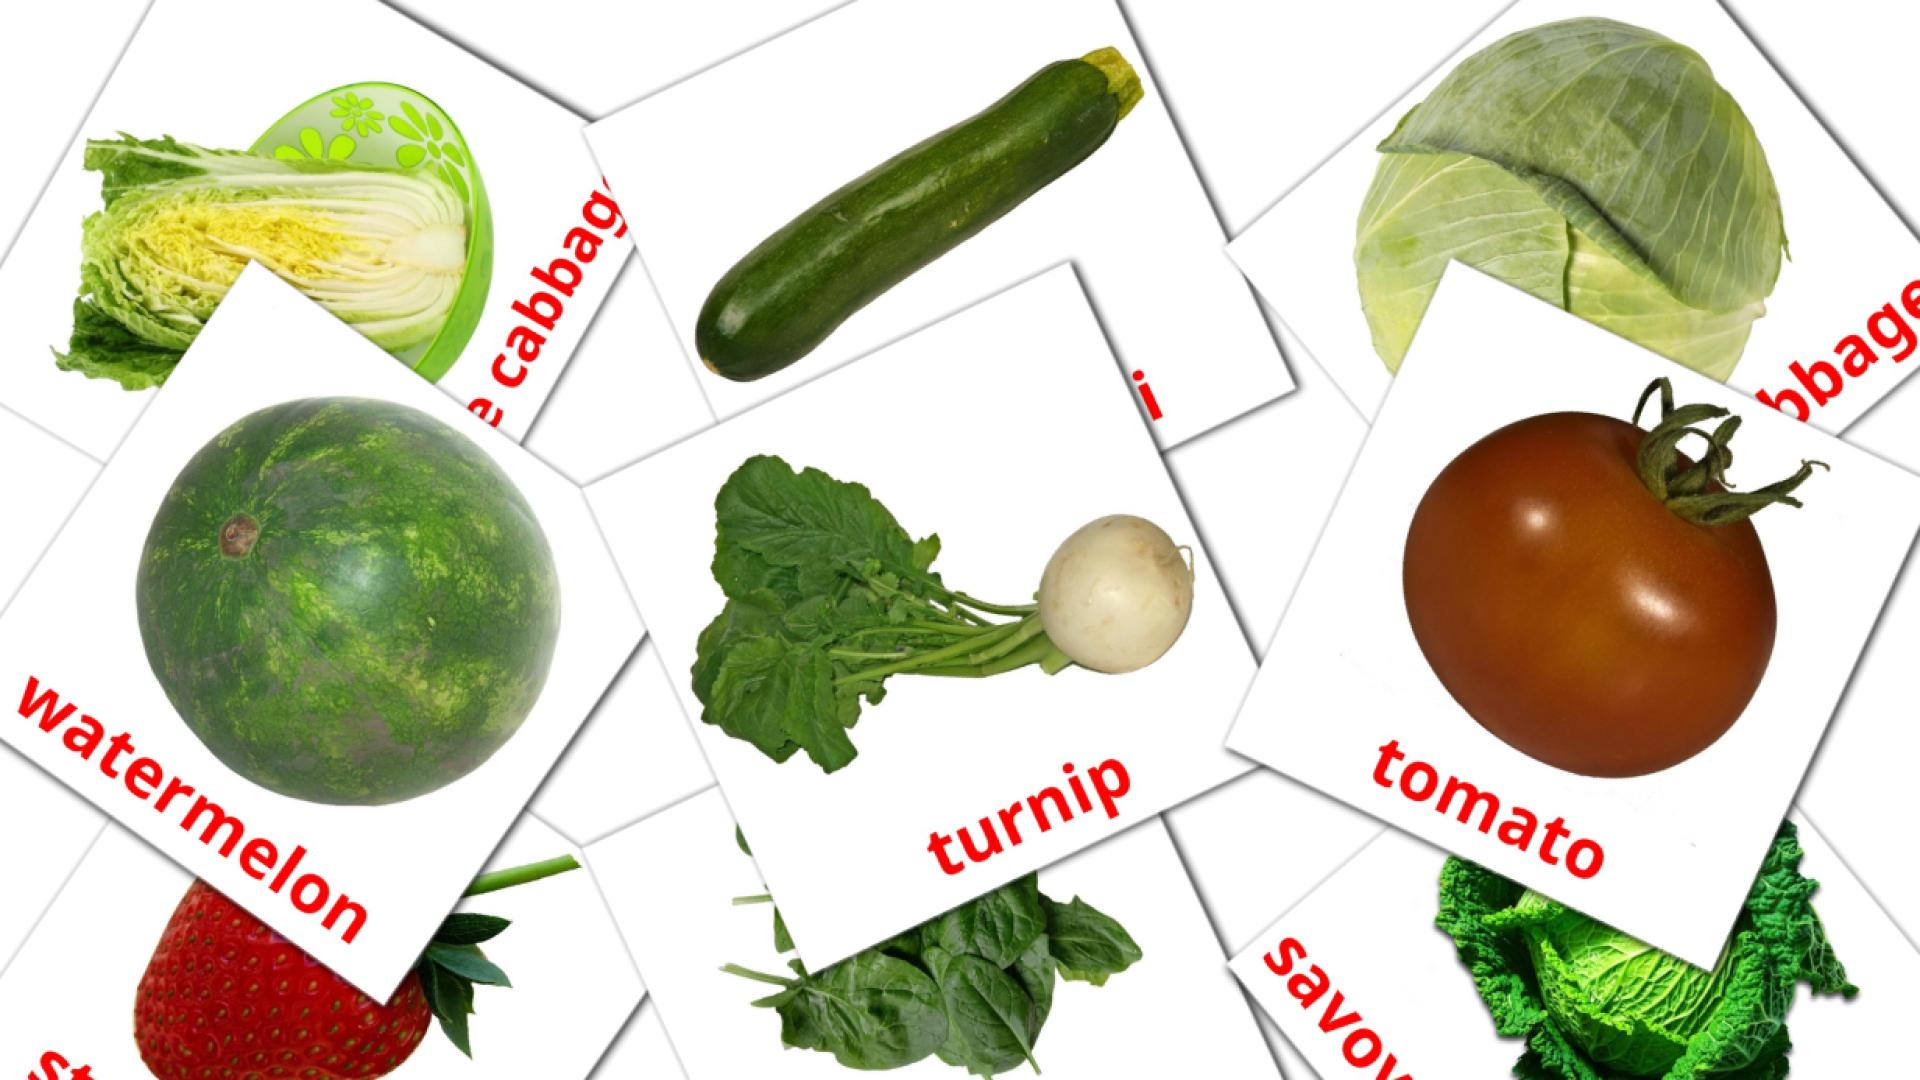 Food tigrigna(Eritrea) vocabulary flashcards